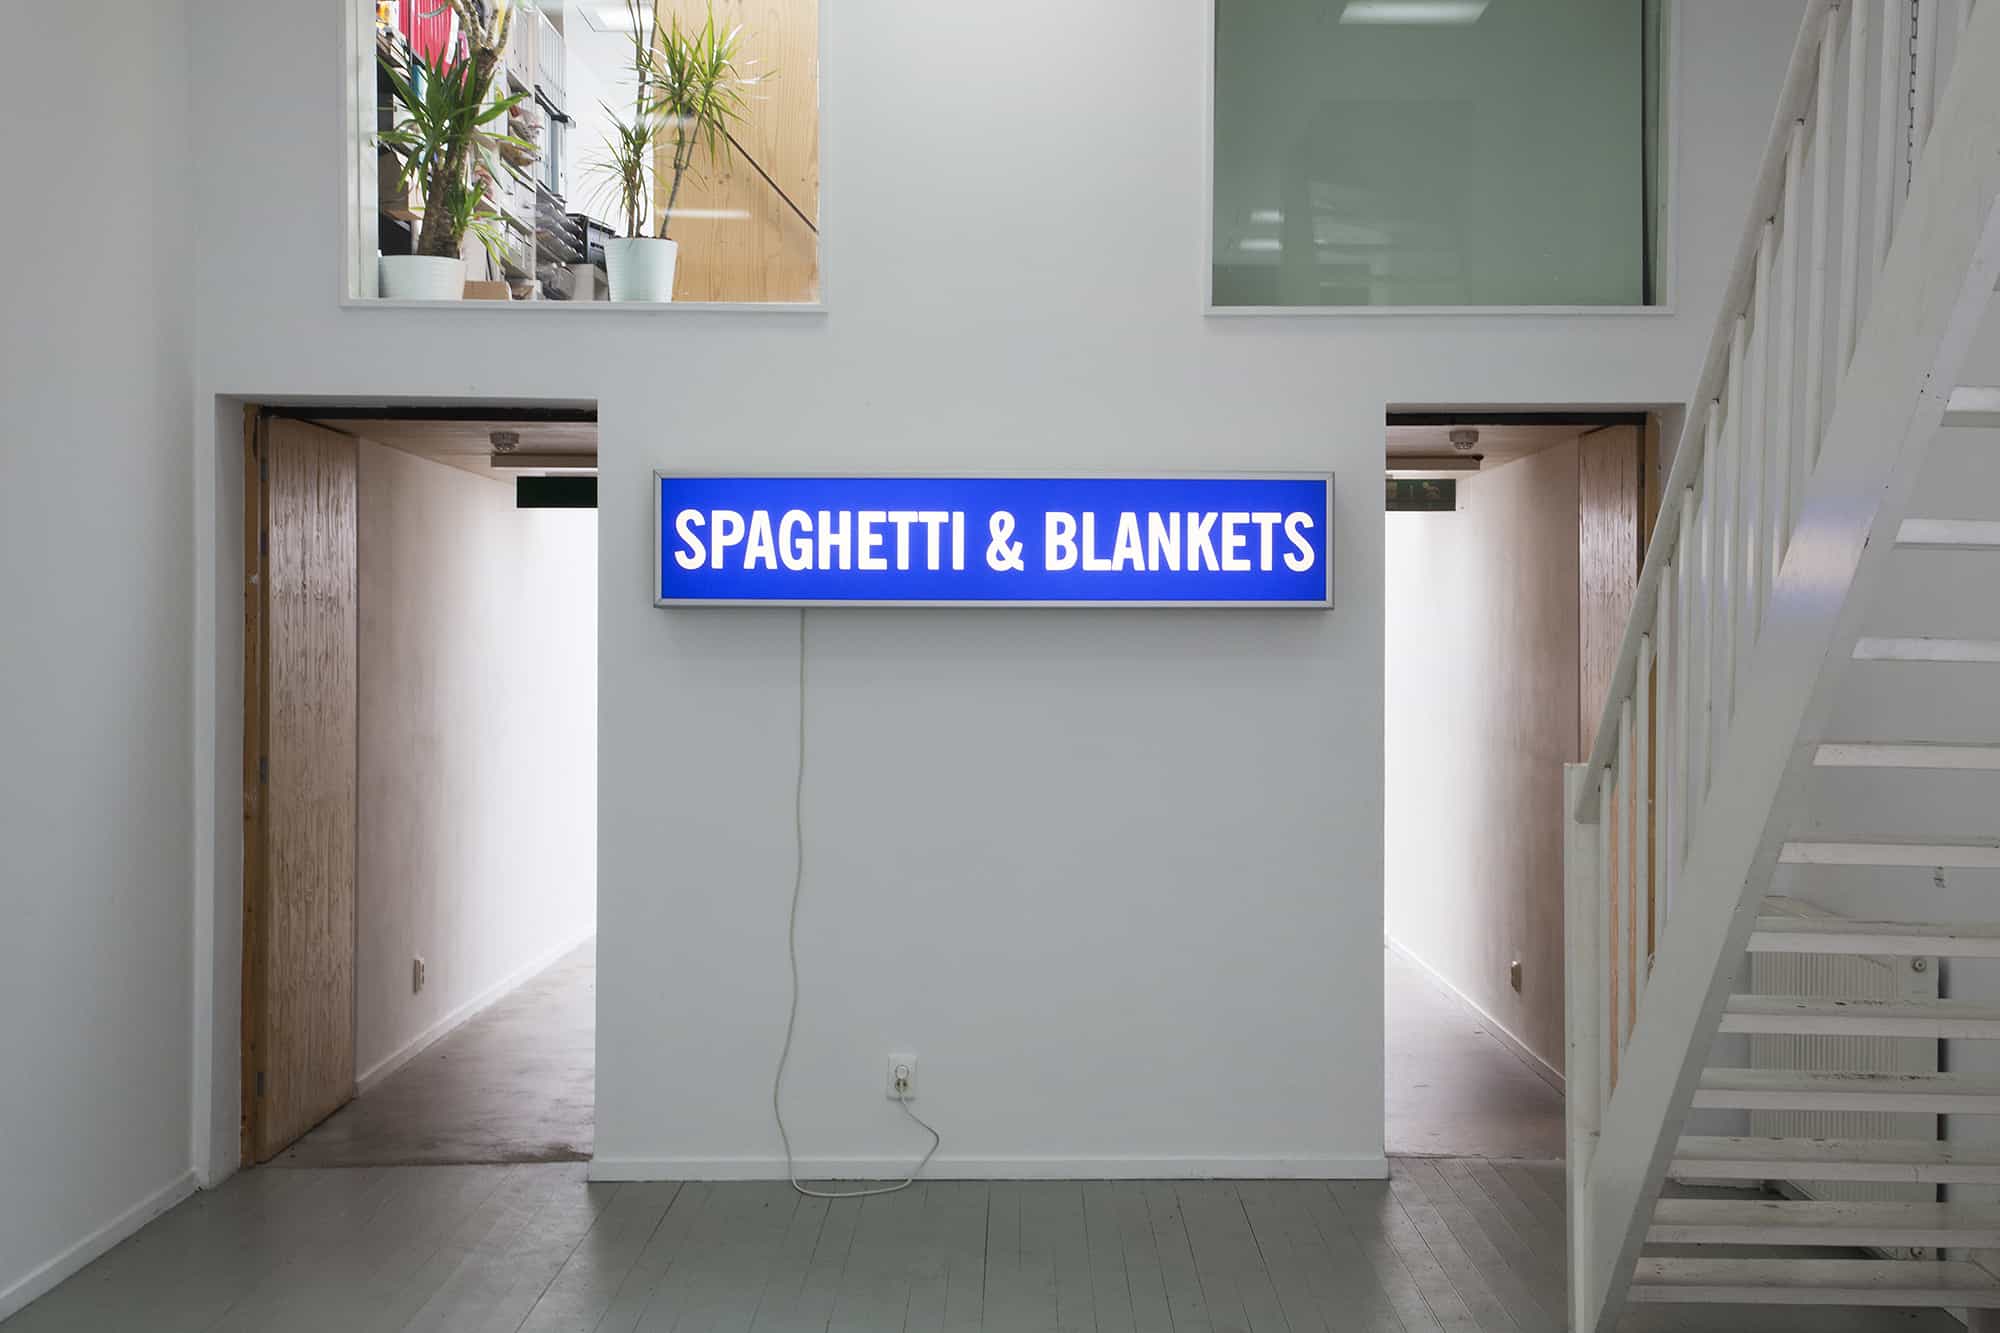 Spaghetti & Blankets, lightbox 200 x 40 x 20 cm, 2013